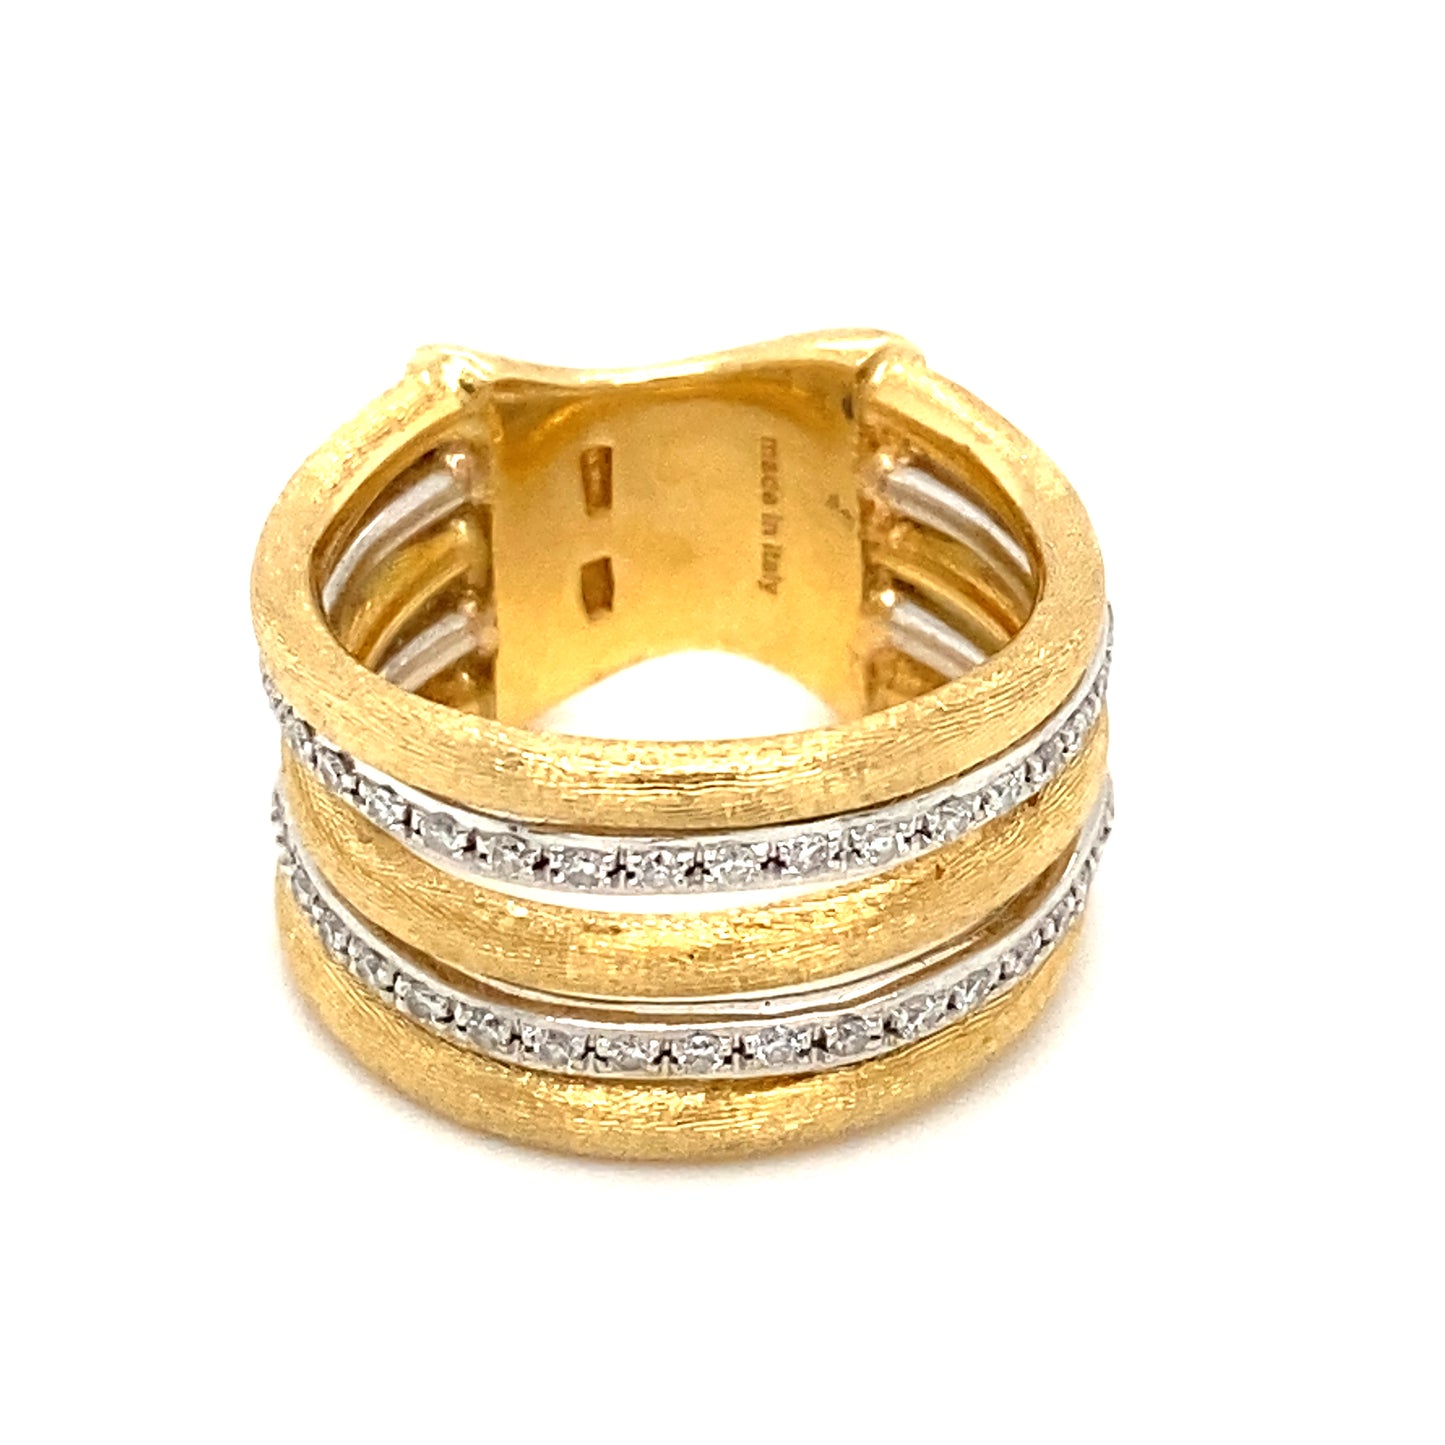 MARCO BICEGO Jaipur Five Row Alternating Diamond Band in 18K Gold